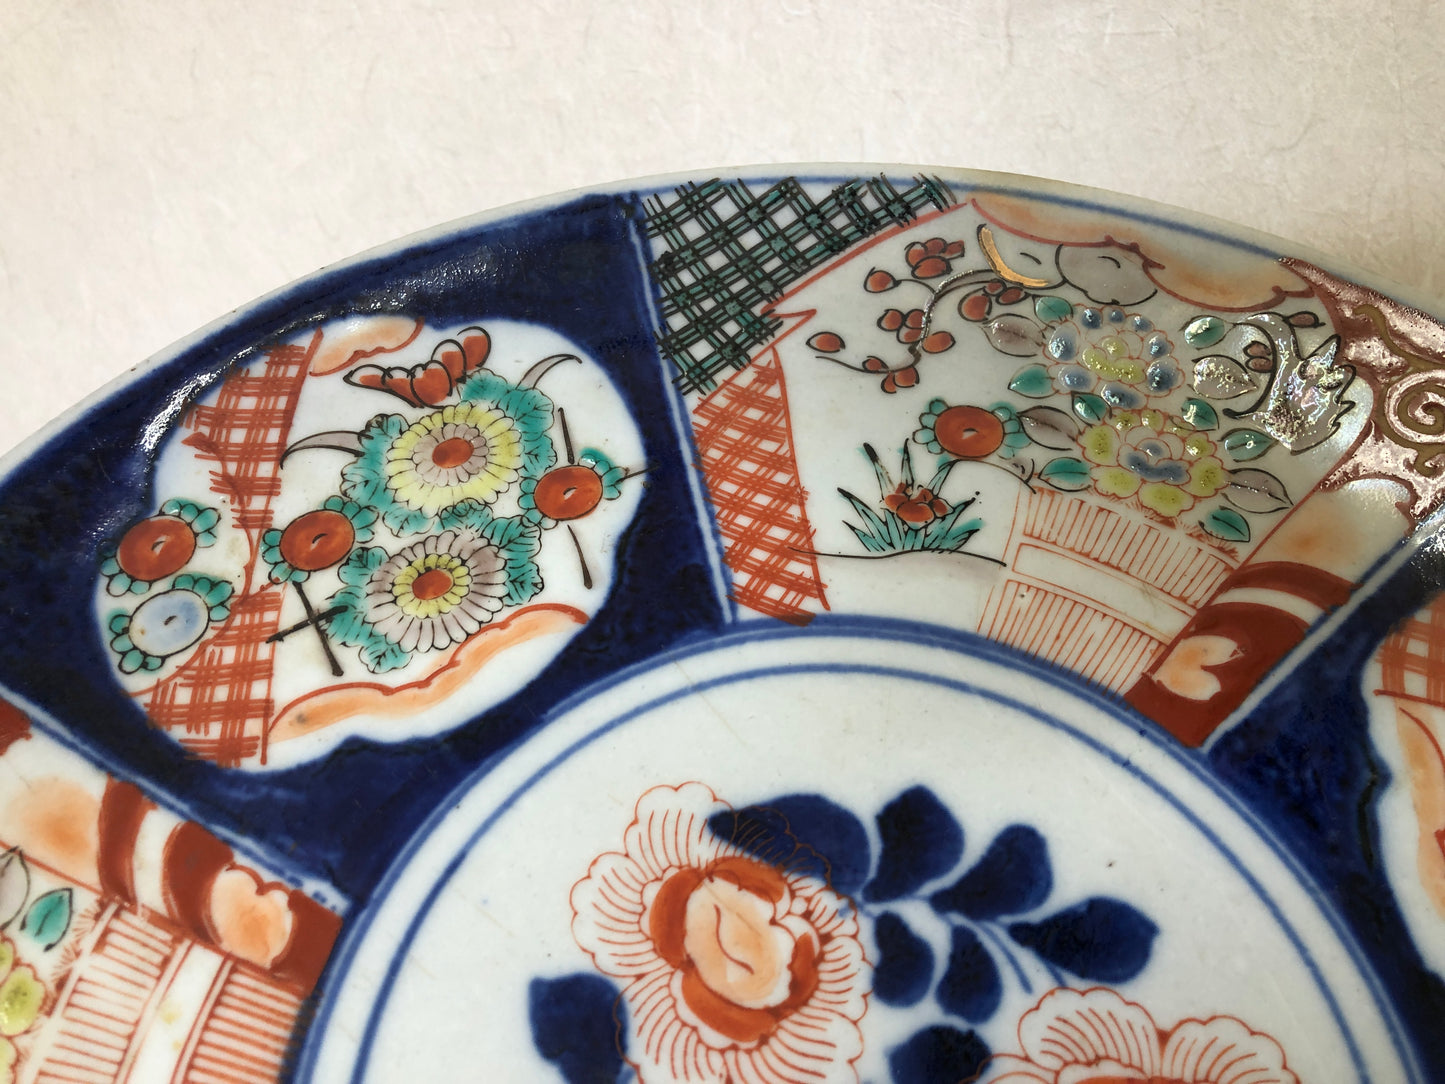 Y4096 DISH Imari-ware color picture platter 31cm Japan antique plate tableware